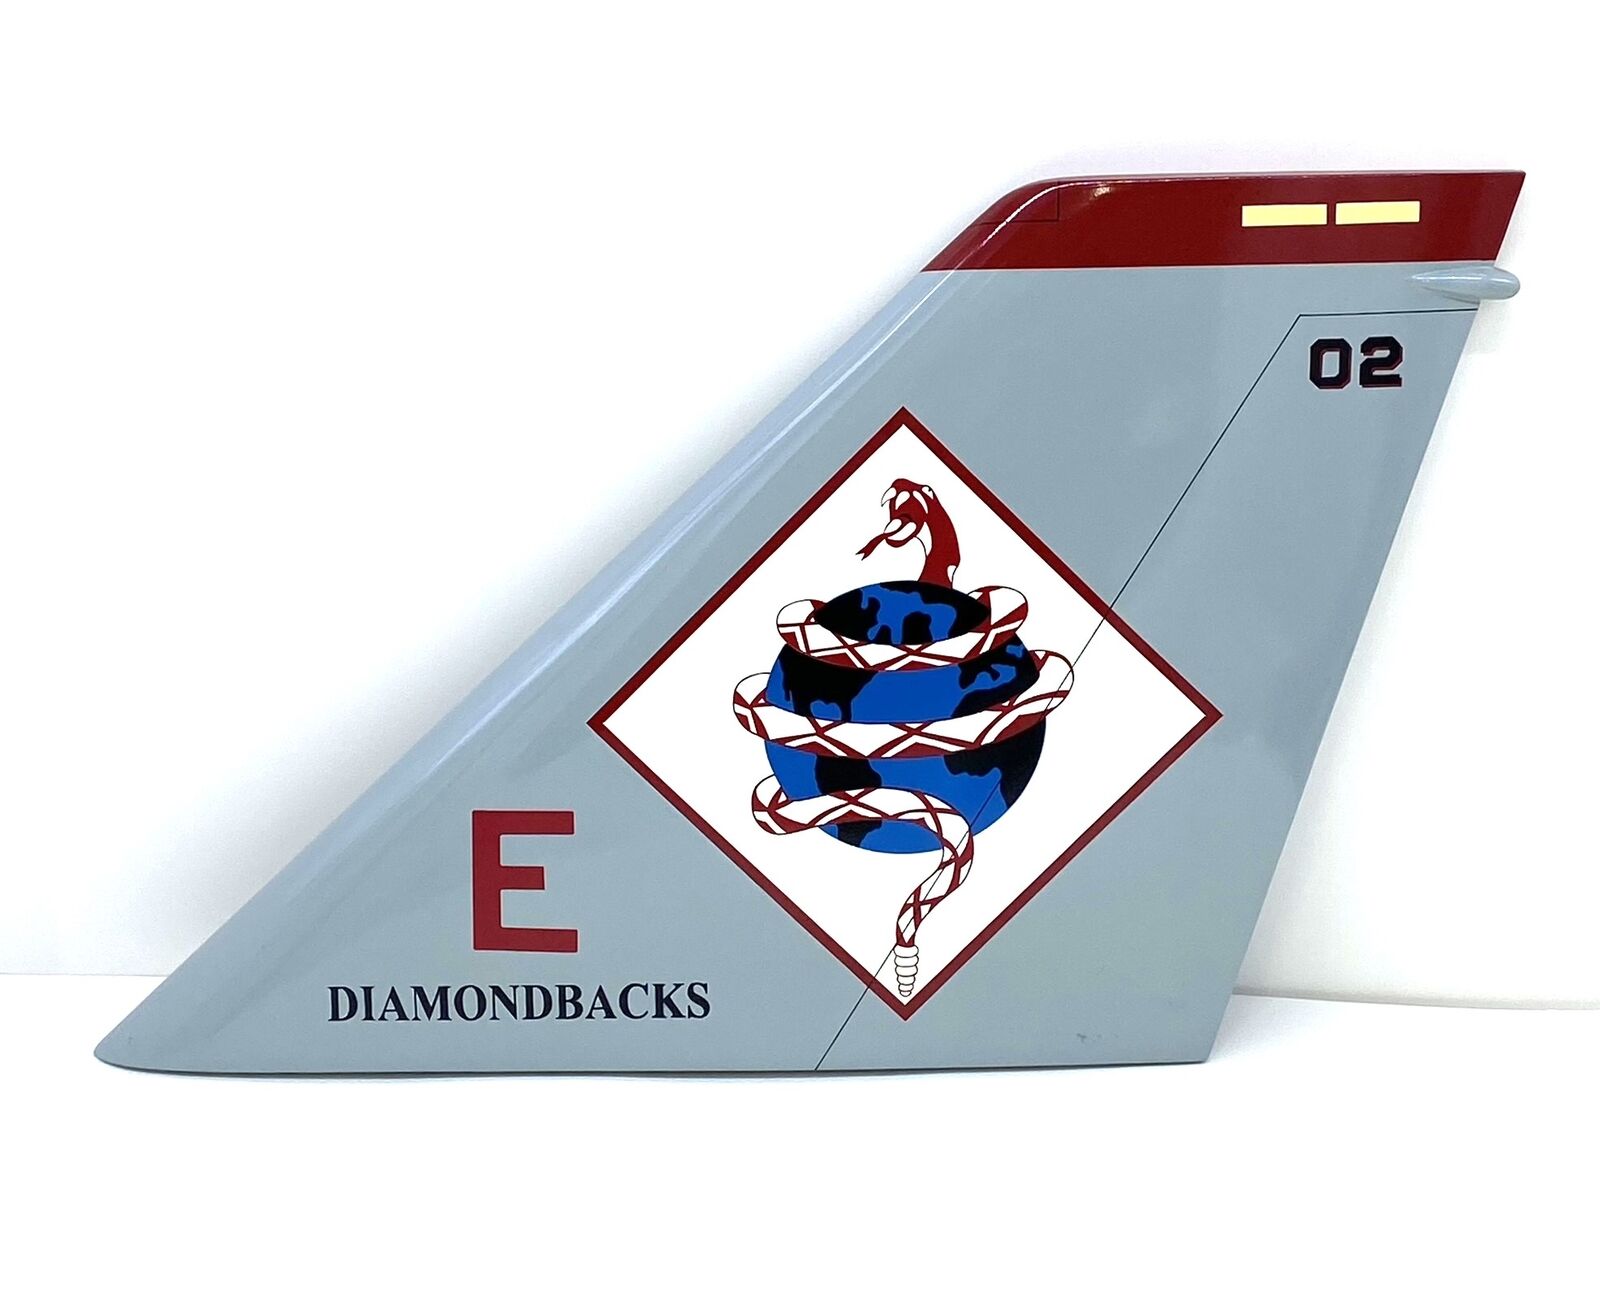 VF-102 Diamondbacks F-14 Tail Flash, Mahogany